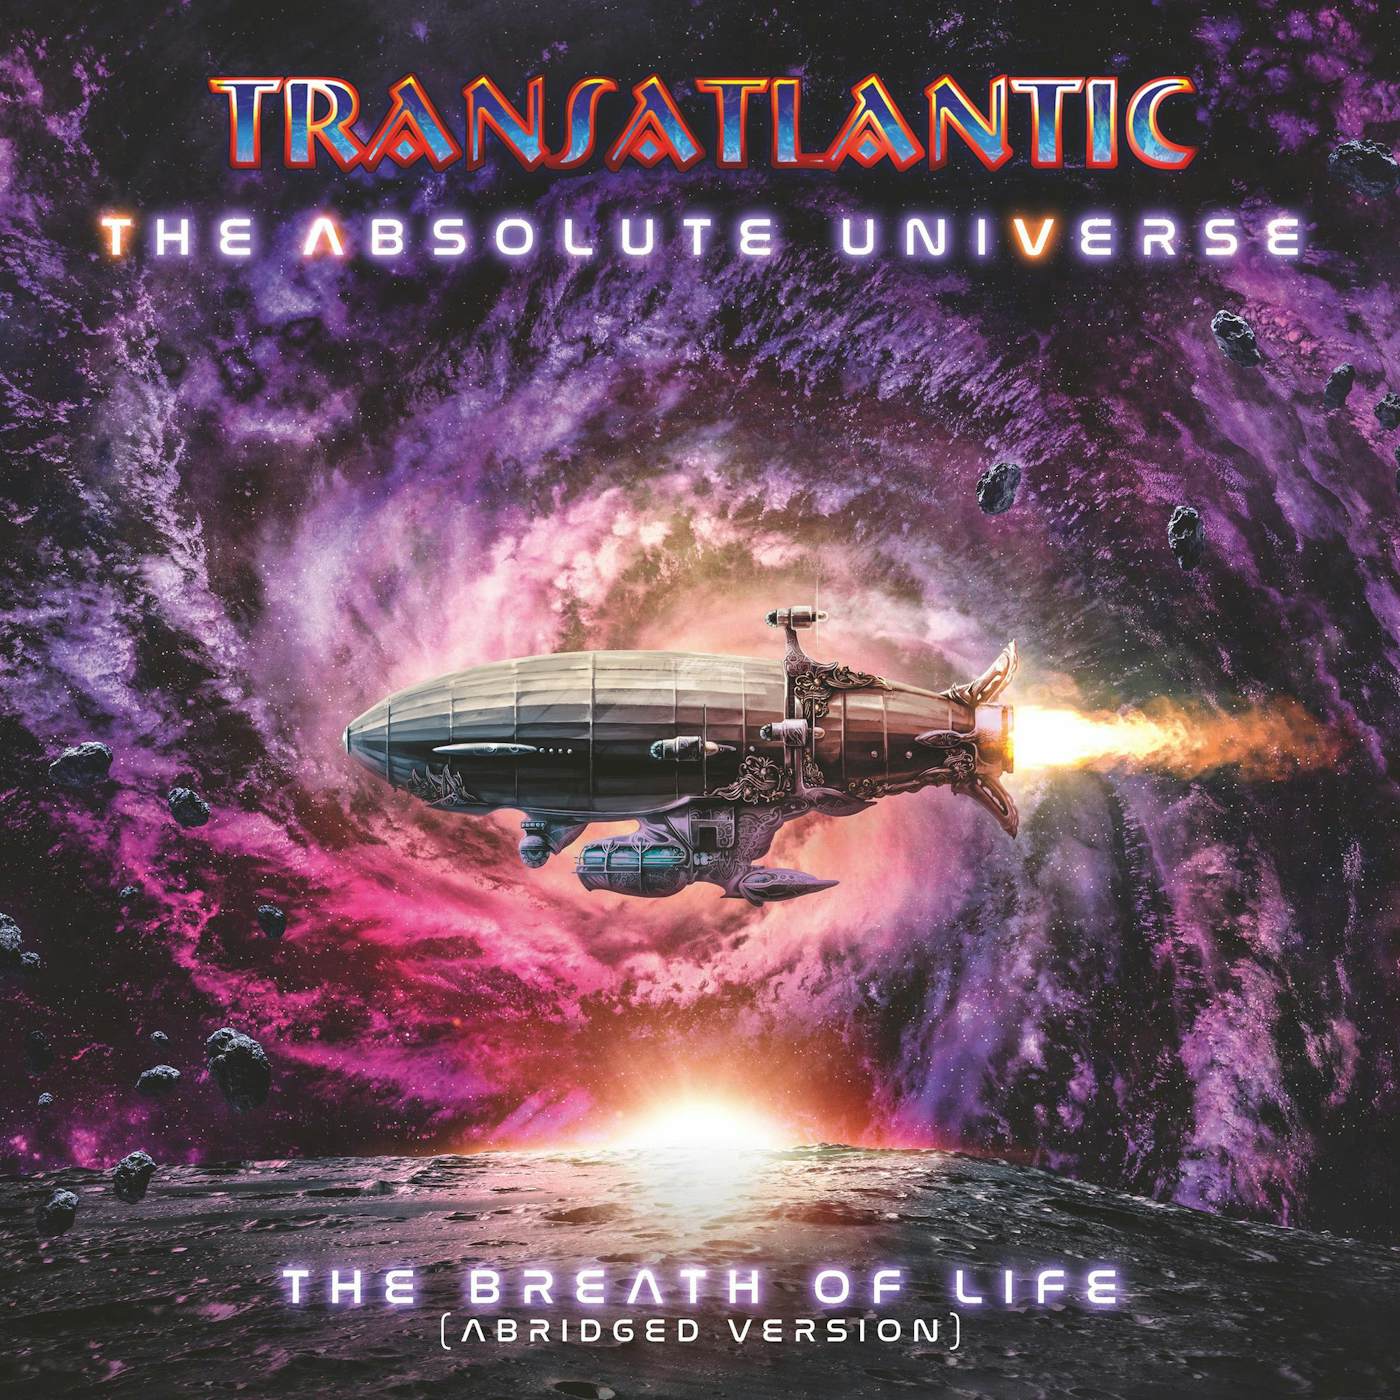 Transatlantic ABSOLUTE UNIVERSE: THE BREATH OF LIFE (ABRIDGED VERSION) Vinyl Record